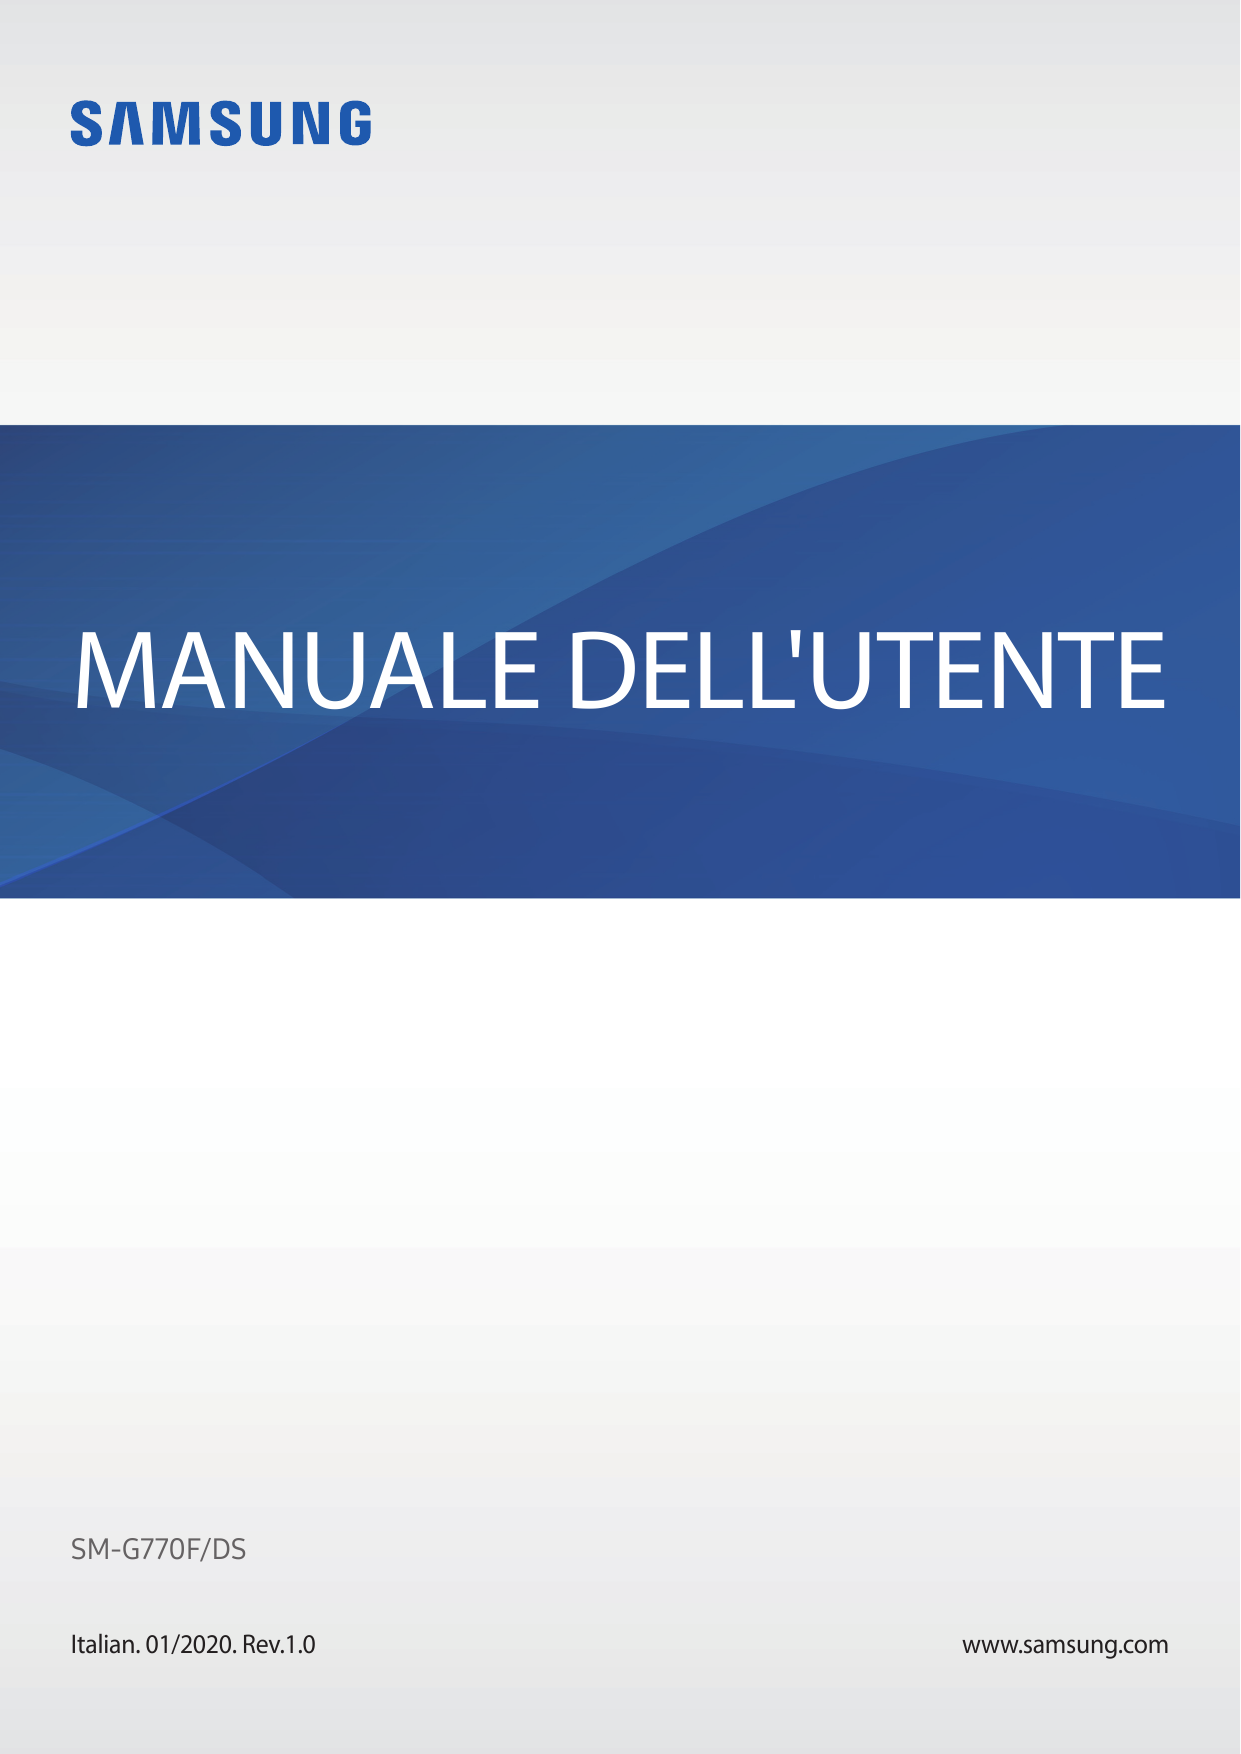 MANUALE DELL'UTENTESM-G770F/DSItalian. 01/2020. Rev.1.0www.samsung.com